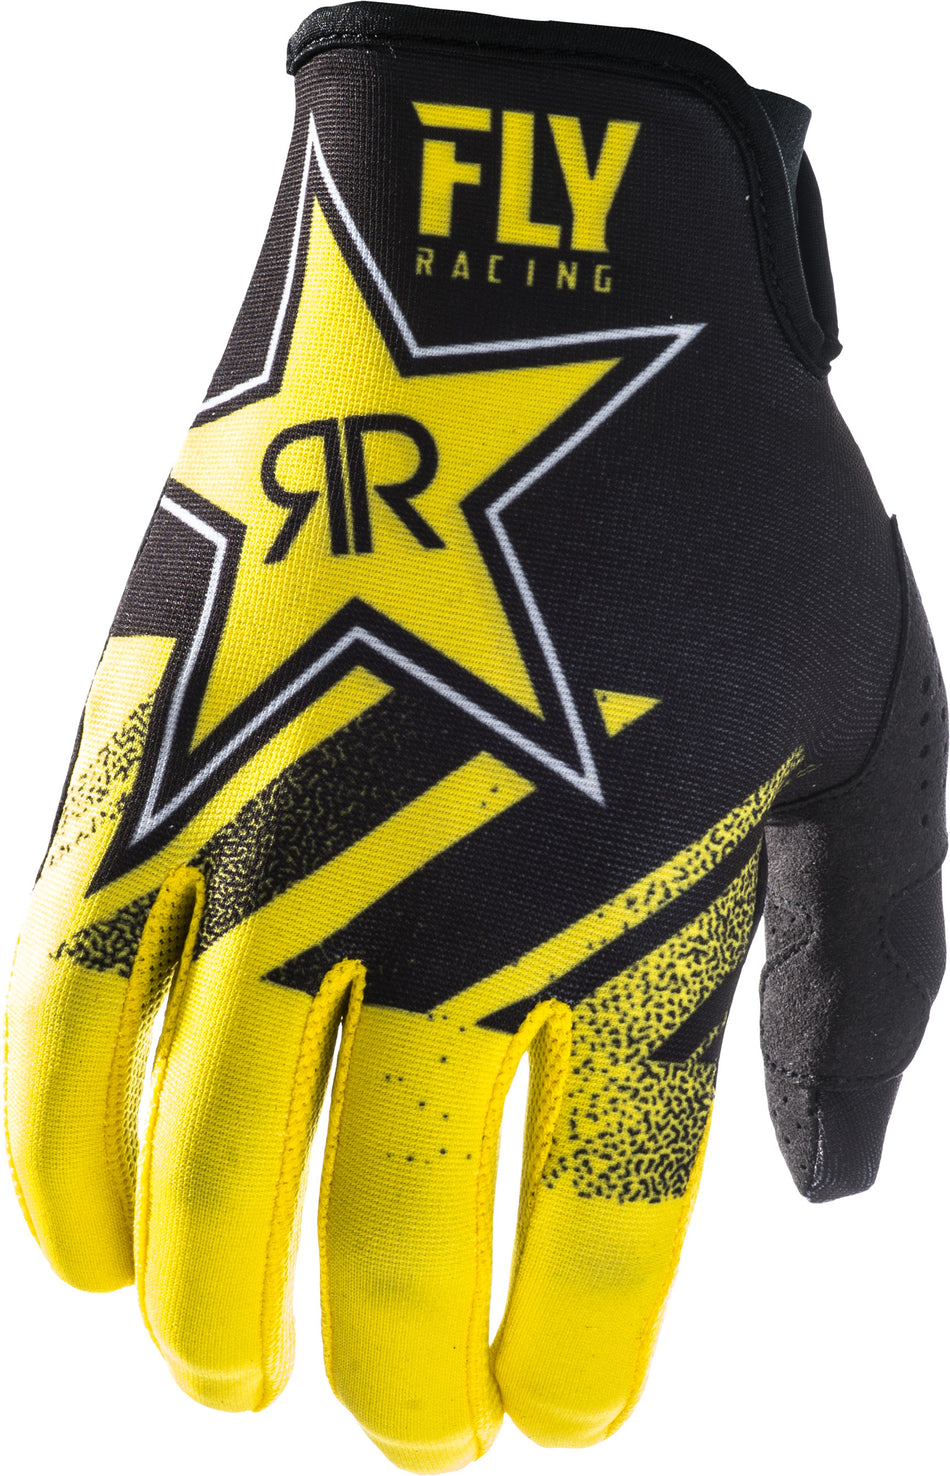 FLY RACING Lite Hydrogen Rockstar Gloves Yellow/Black Sz 10 372-01810